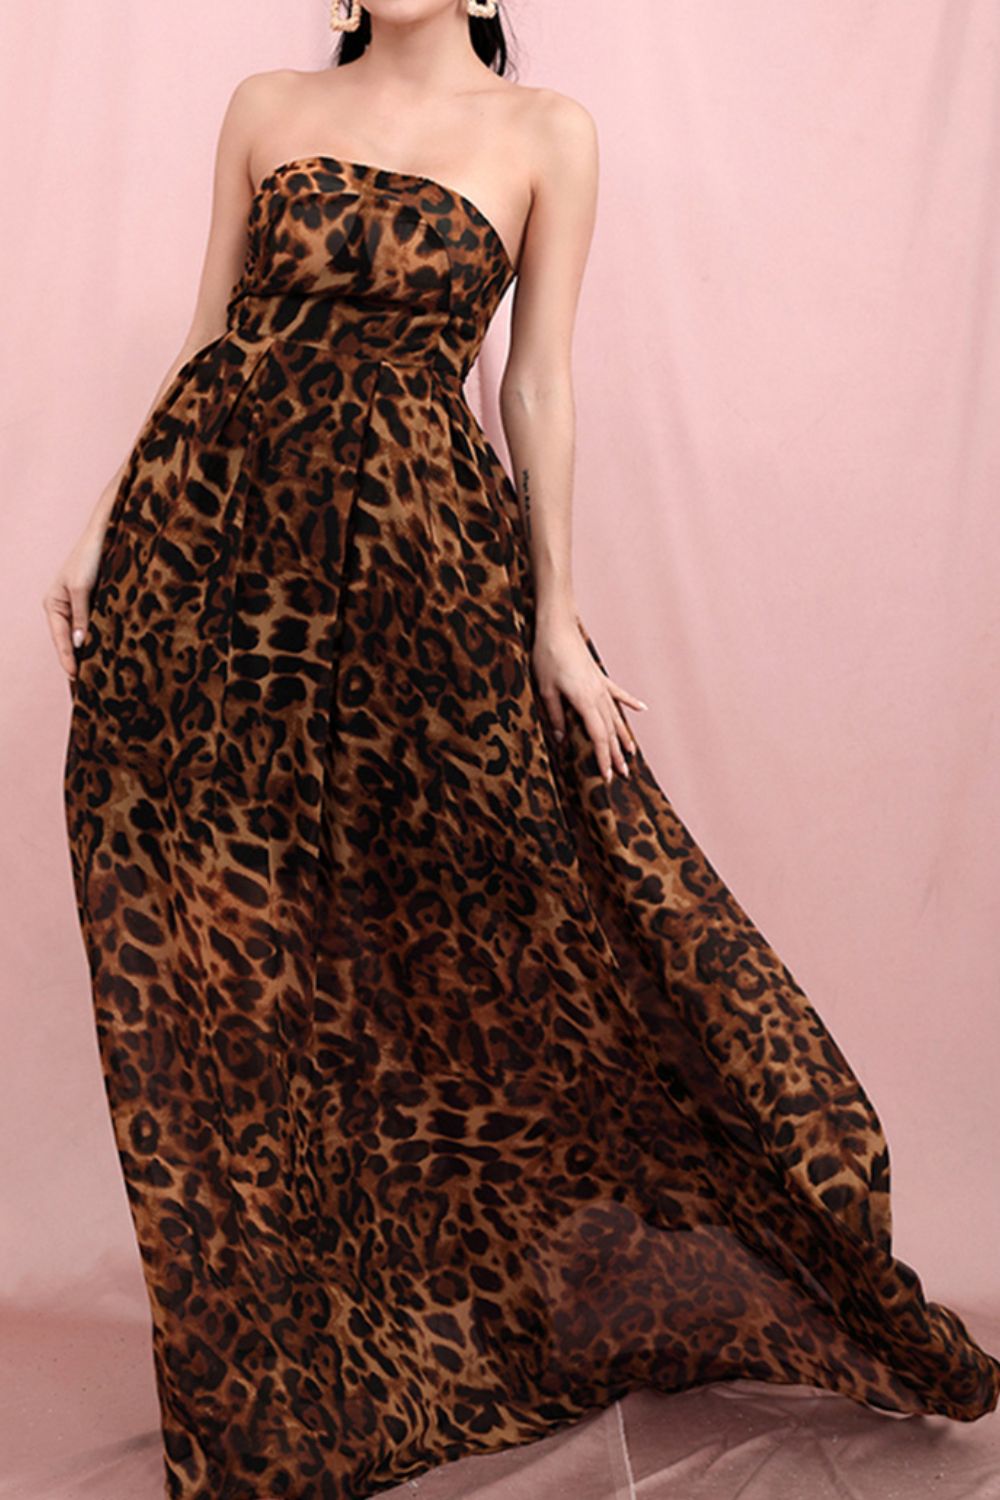 Leopard Print Strapless Dress